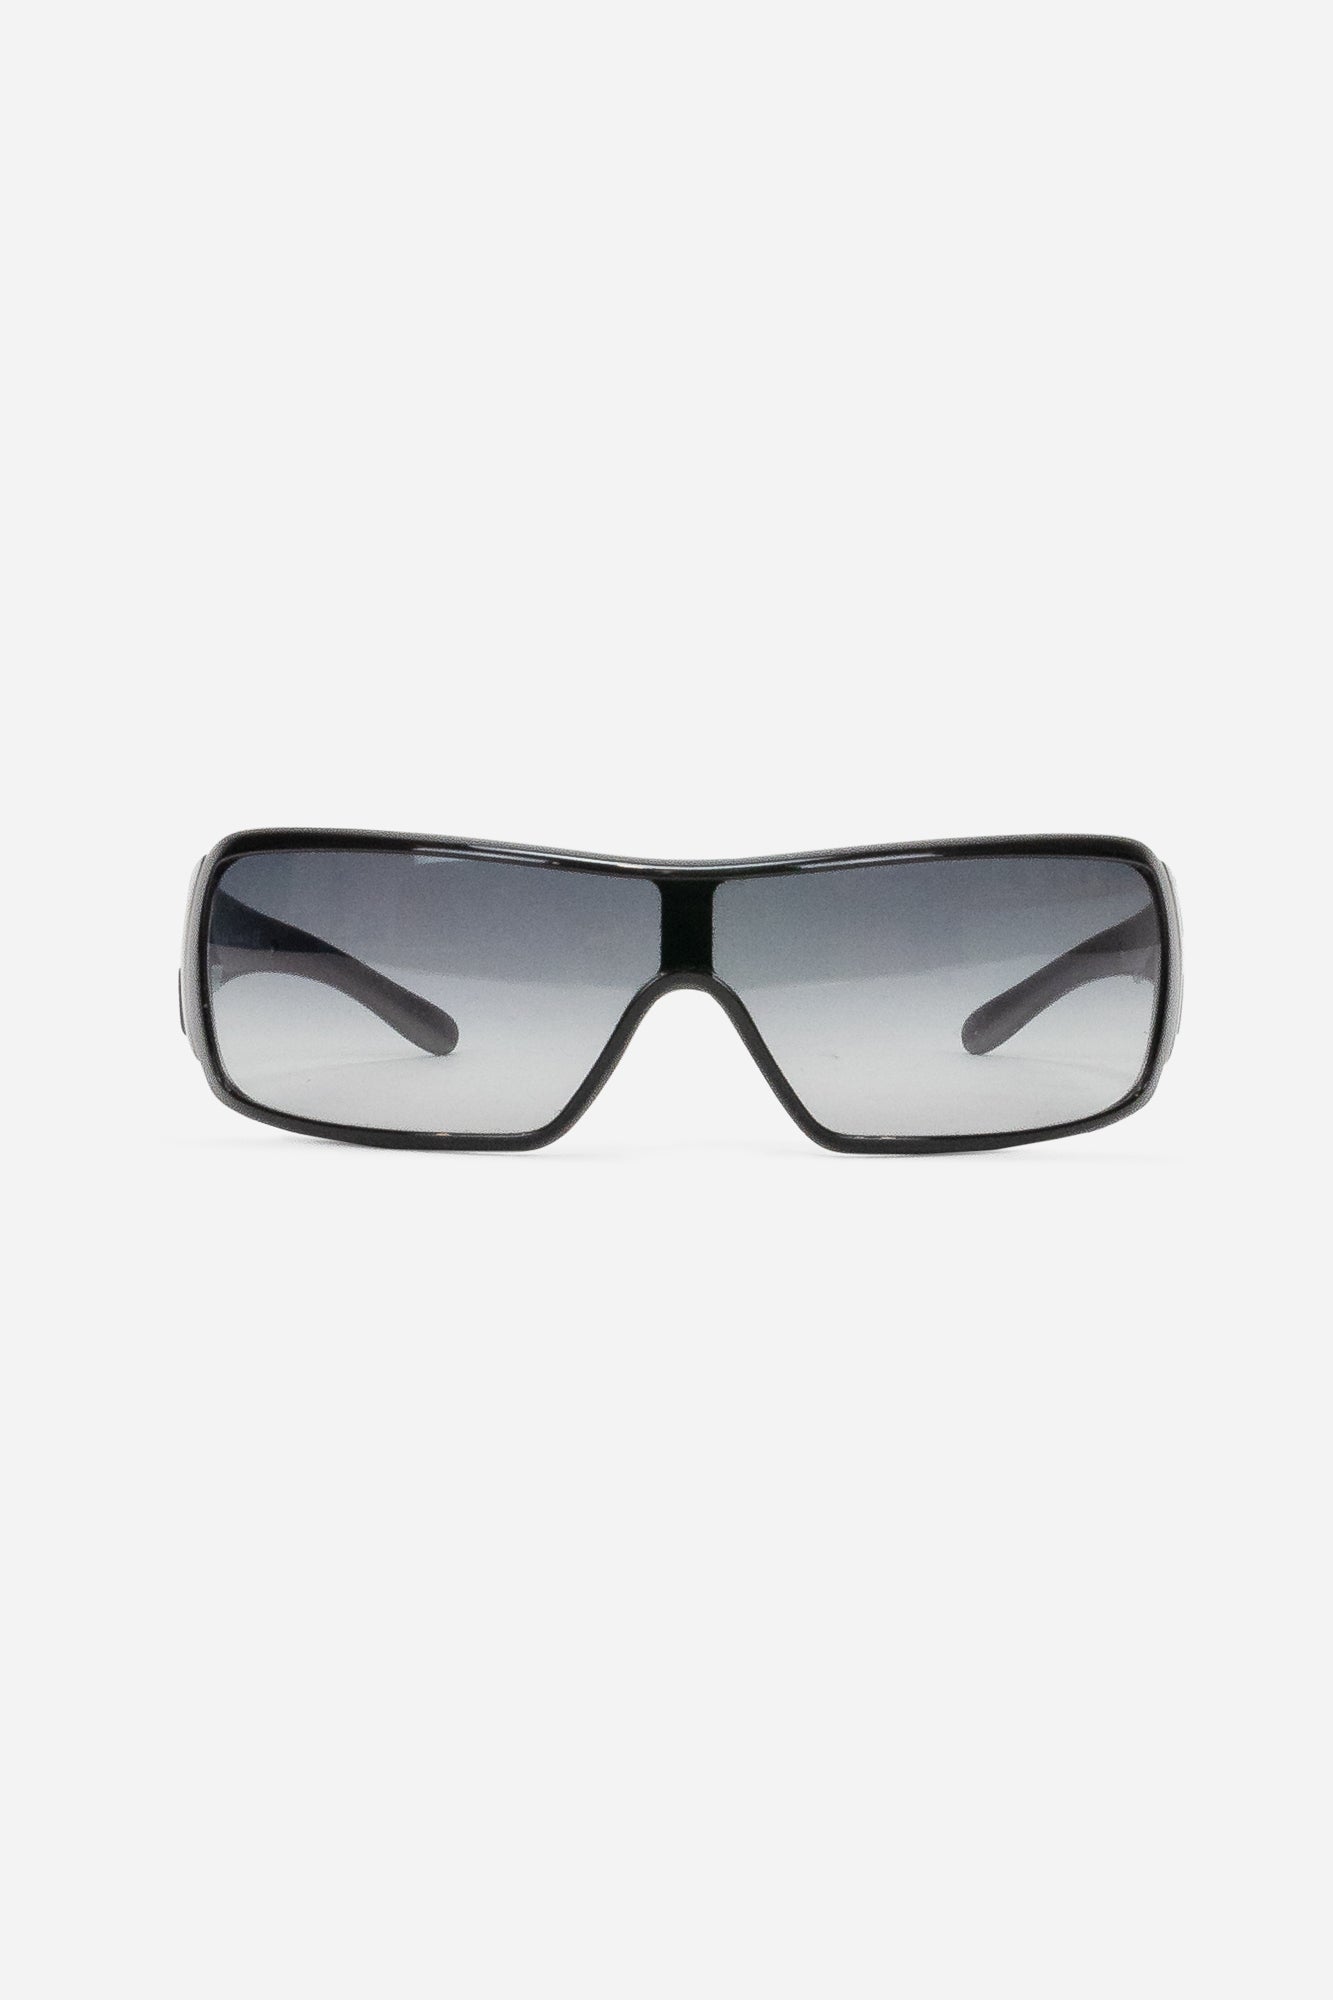 Grey and Black Gradient Shield Sunglasses